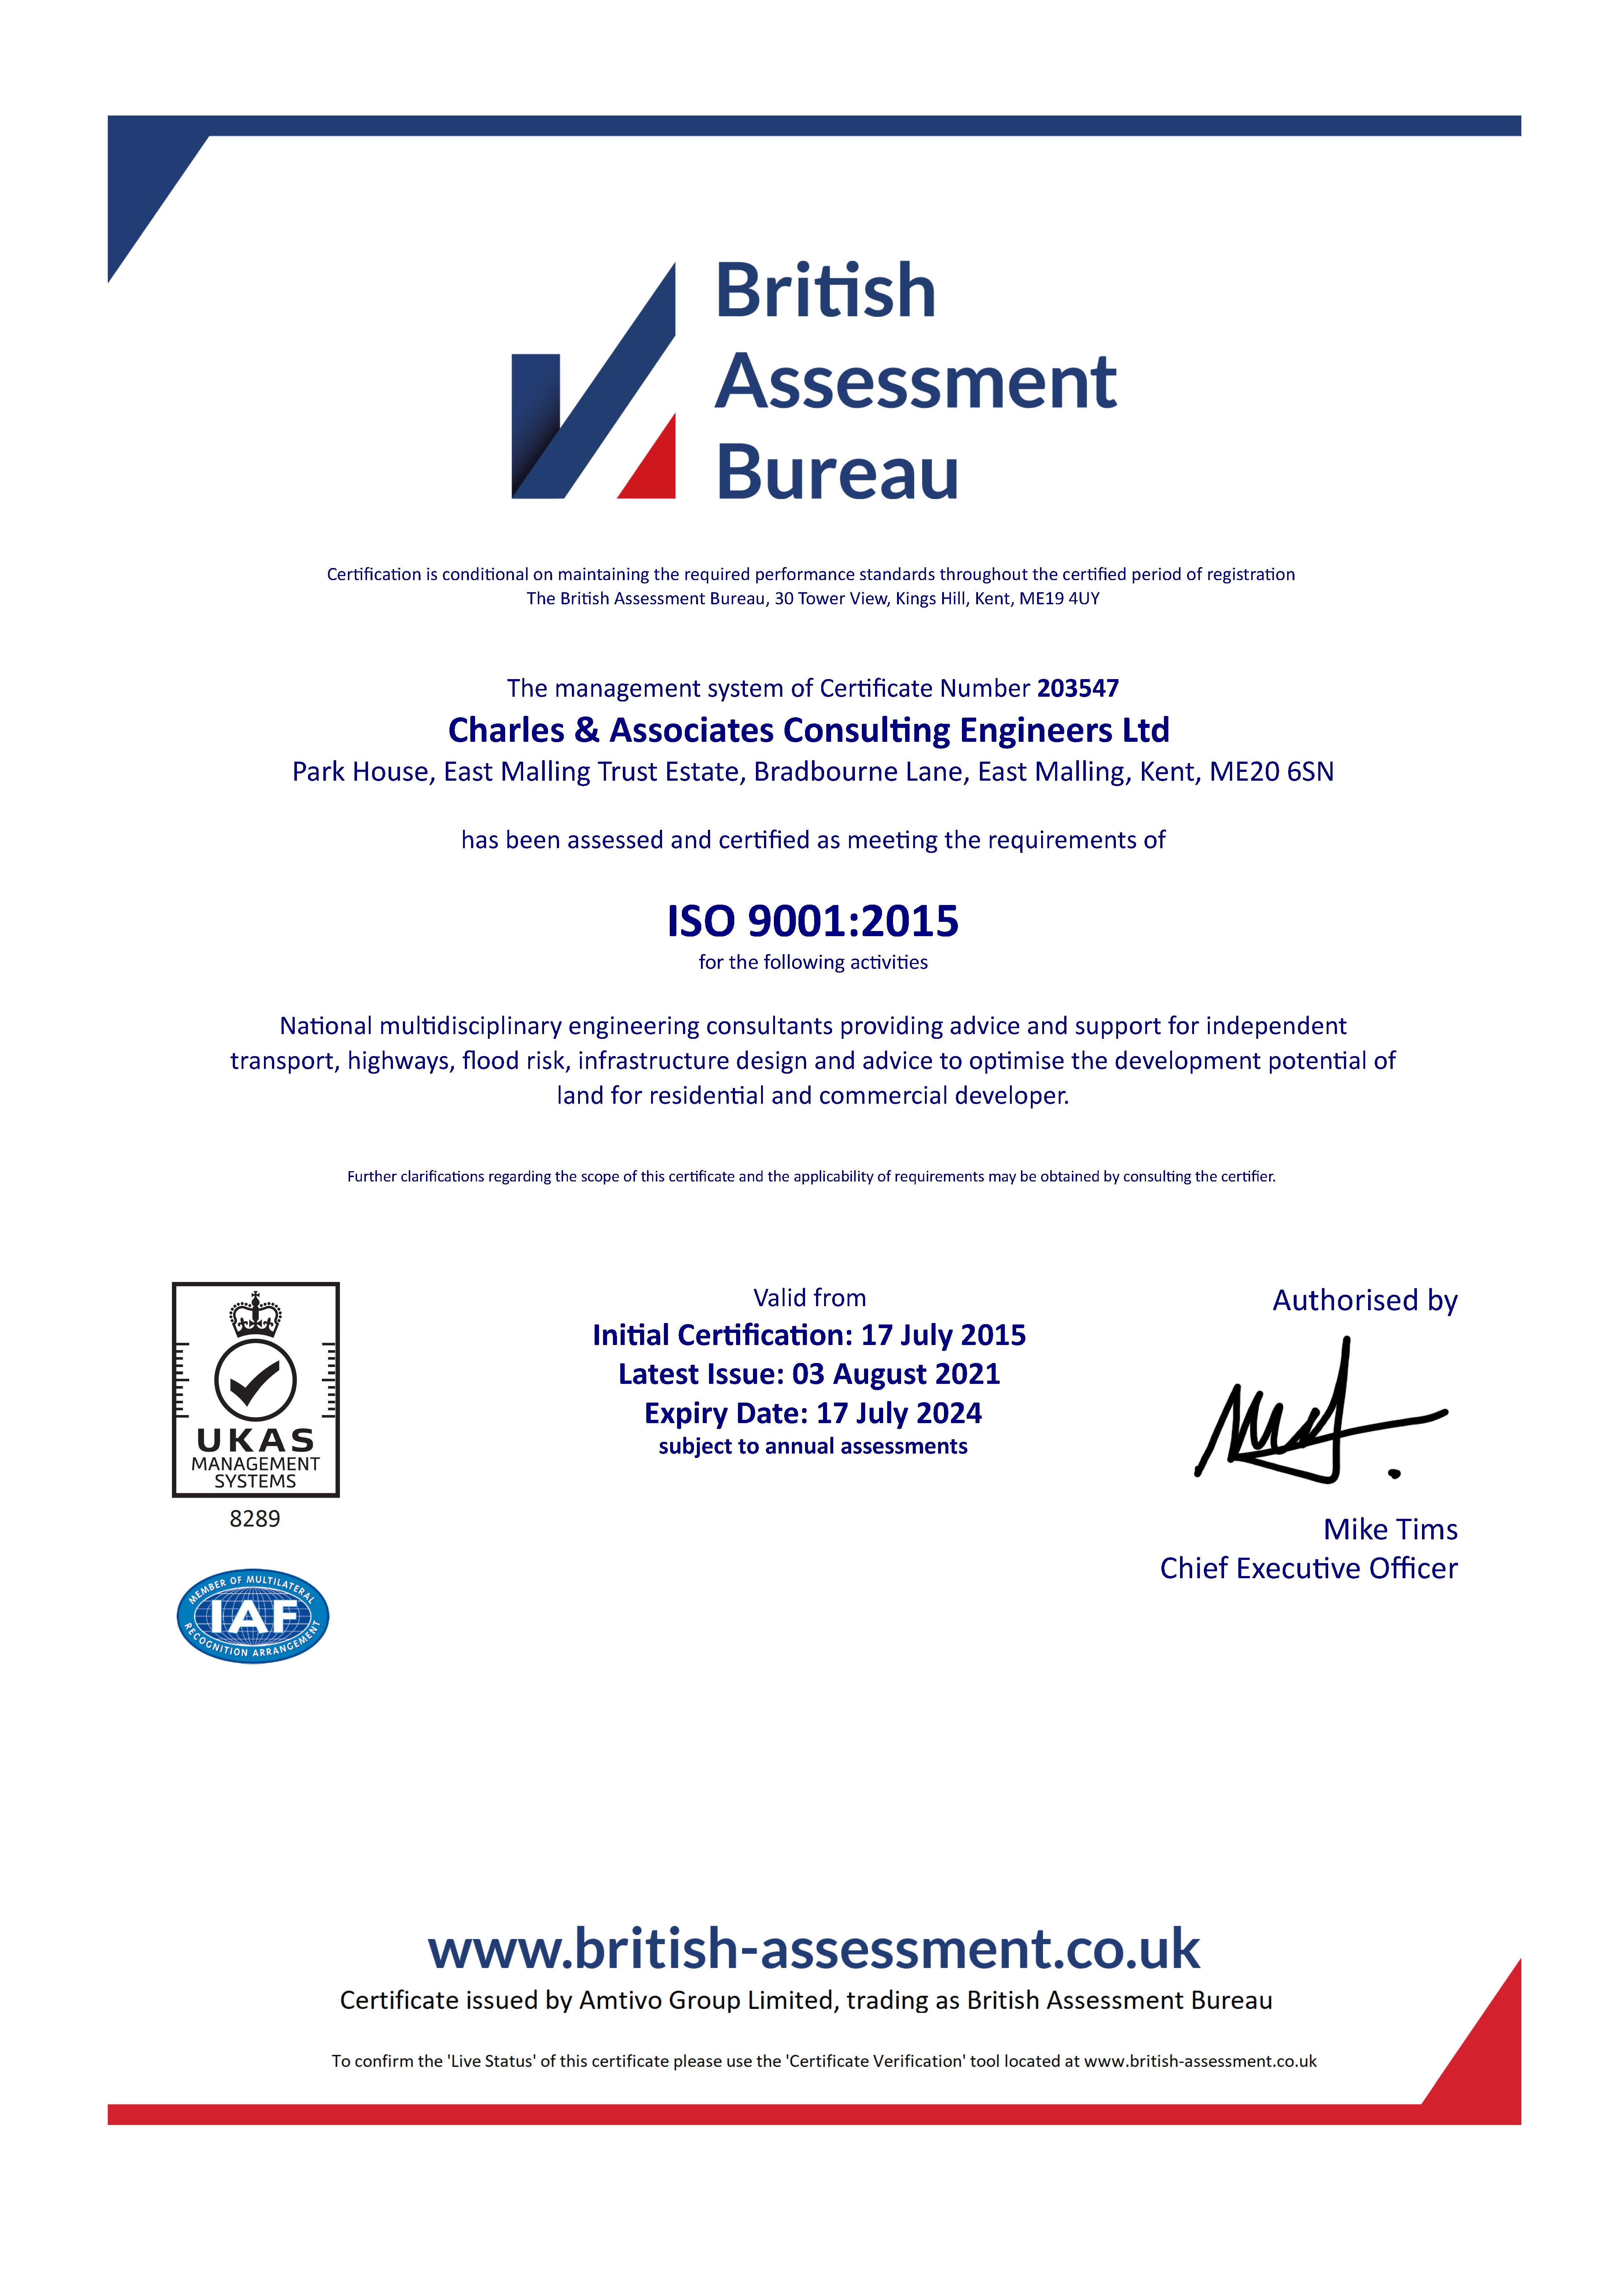 British Assessment Bureau Certificate 2021 Page 1